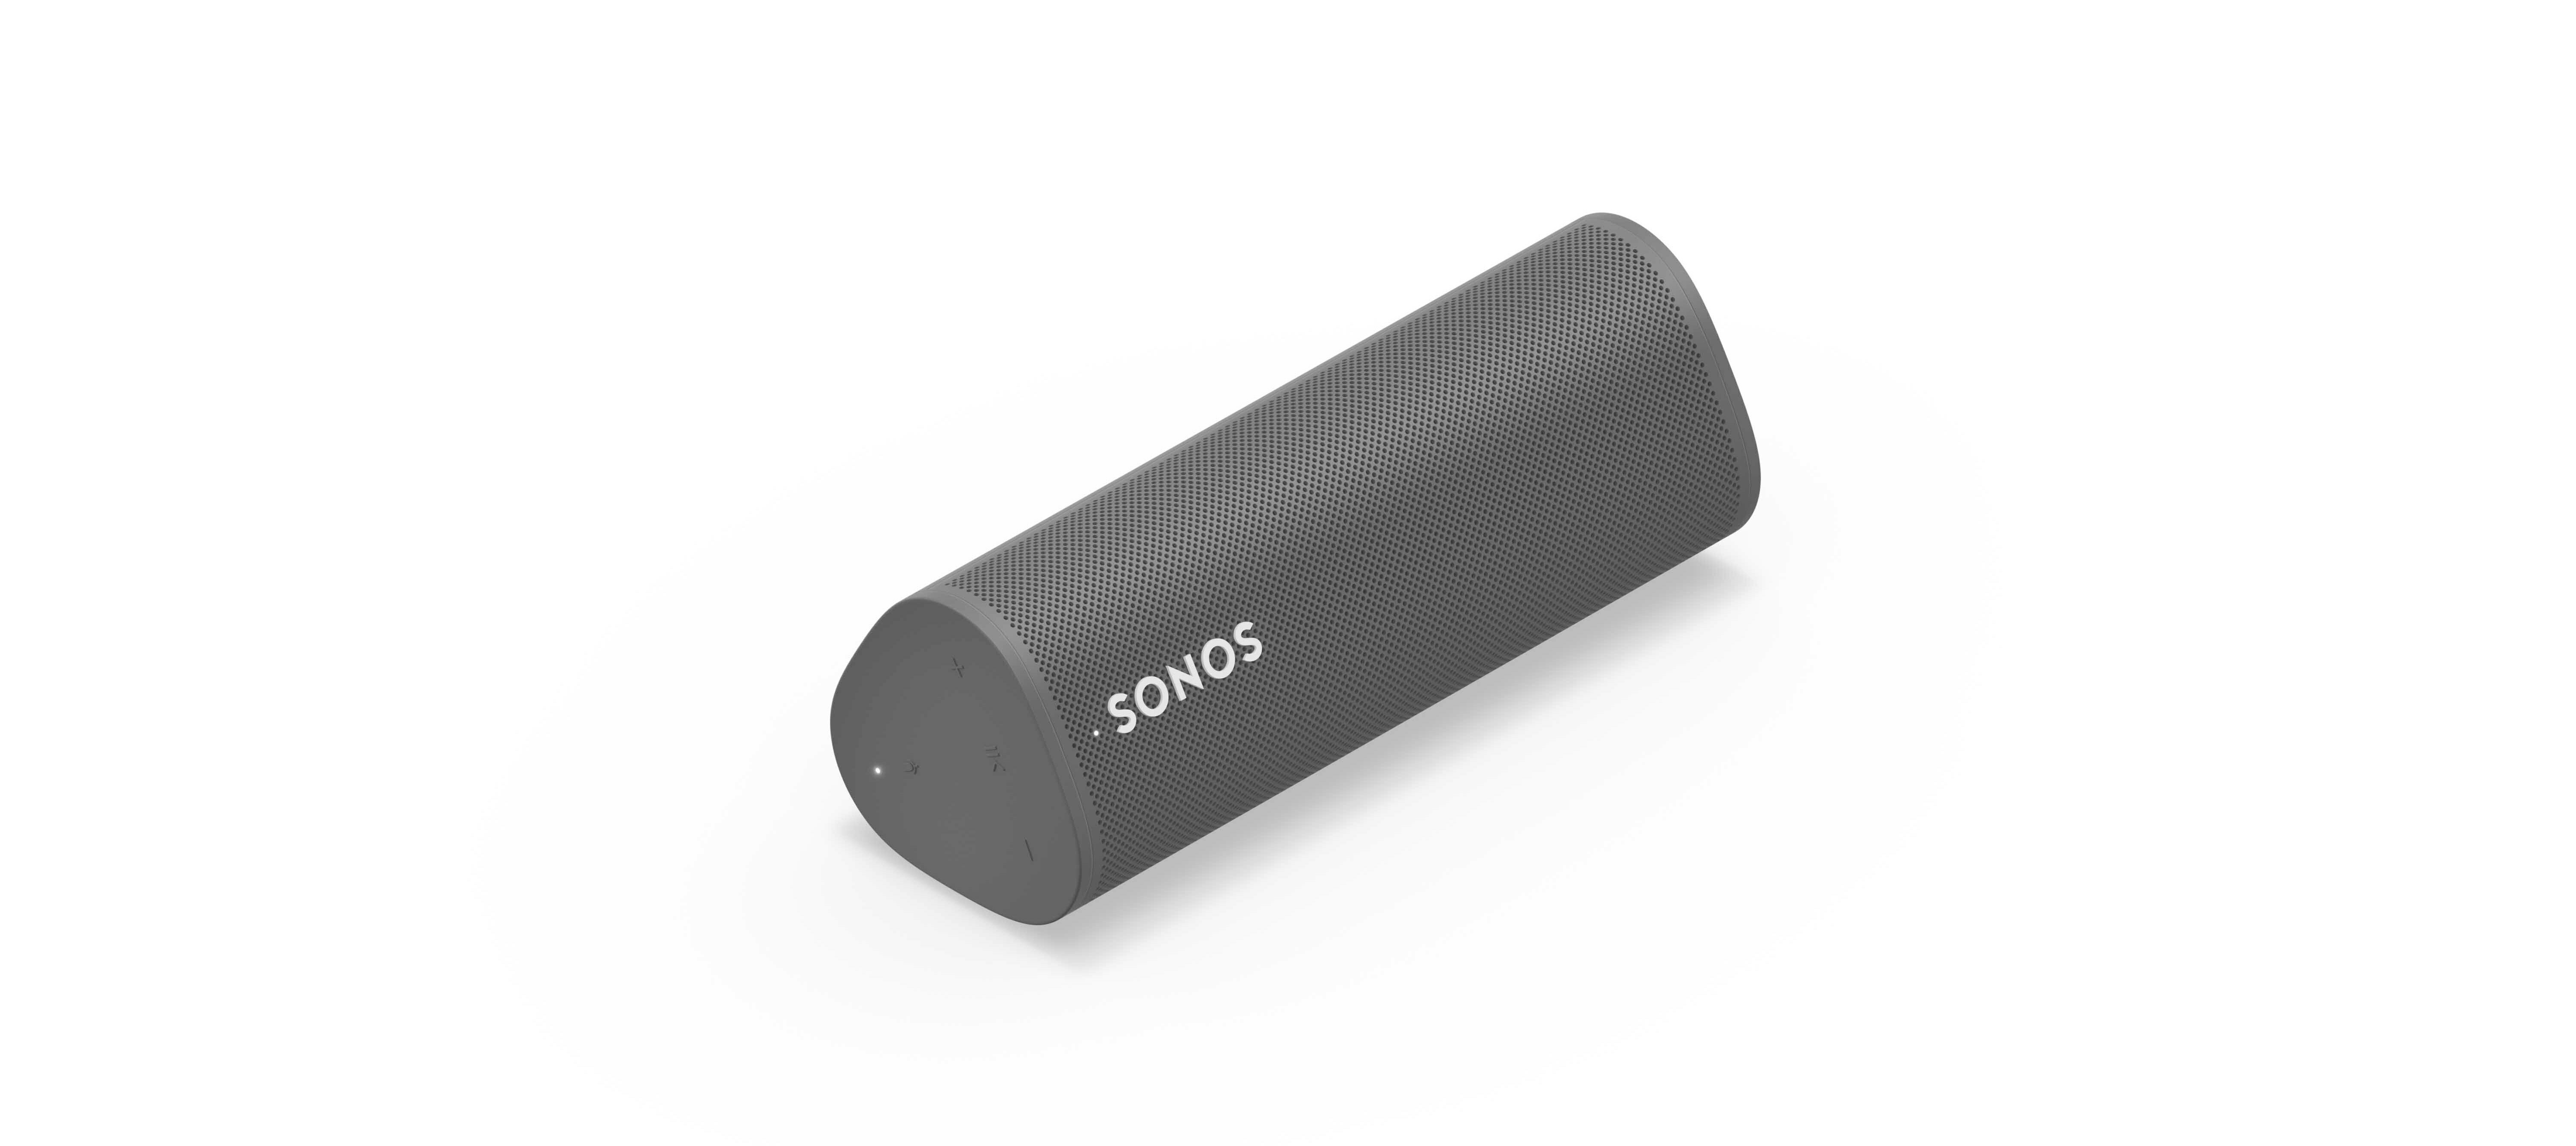 Meet Sonos Roam, the ultra-portable smart speaker